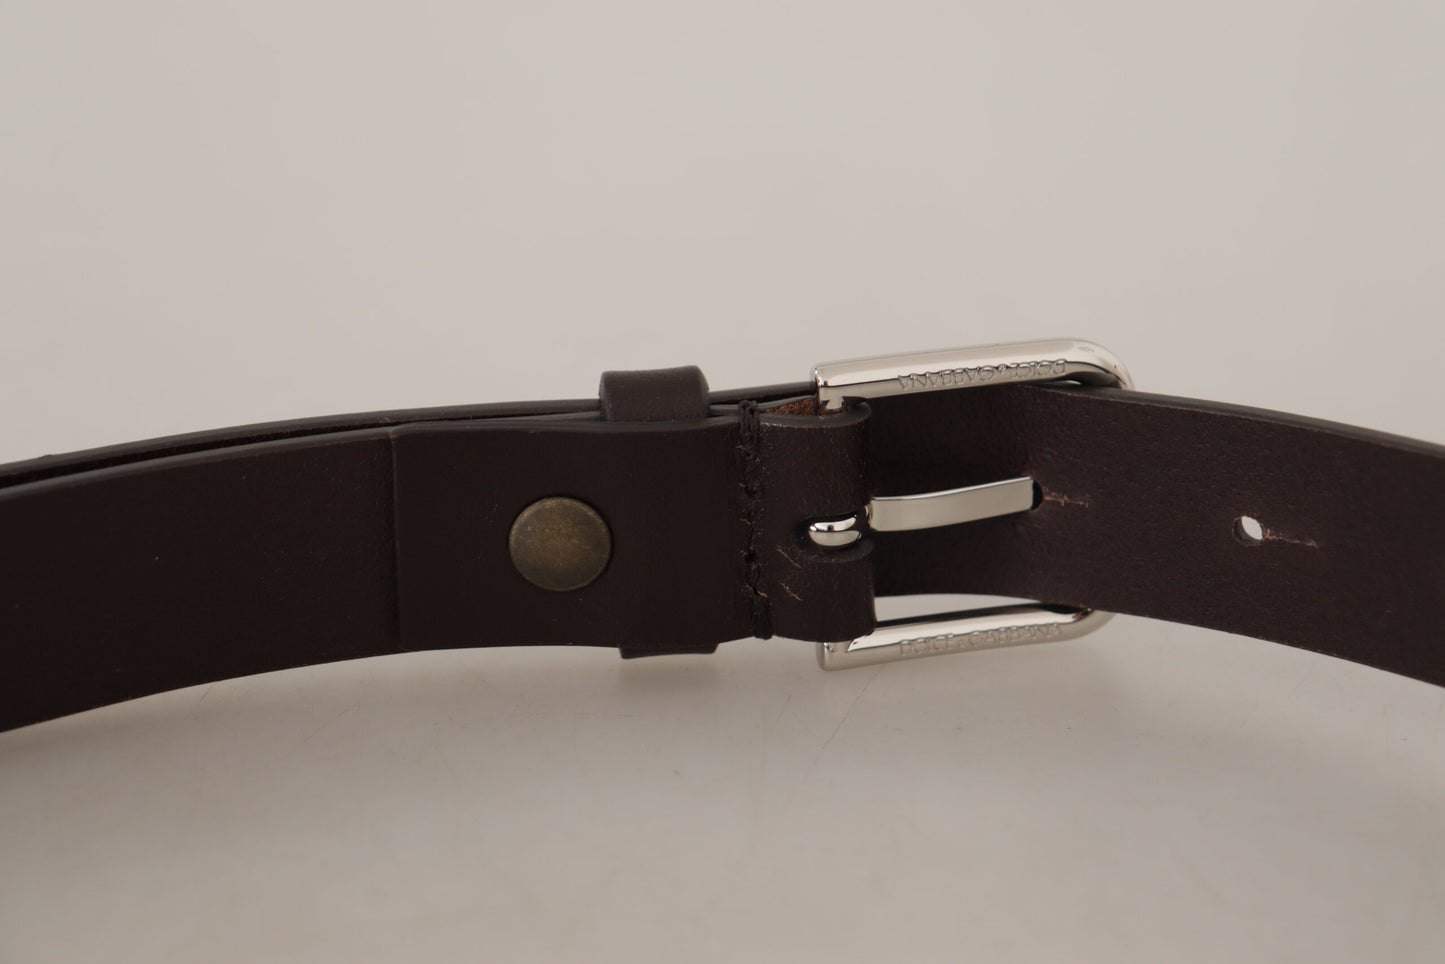 Elegant Leather Belt with Engraved Logo Buckle